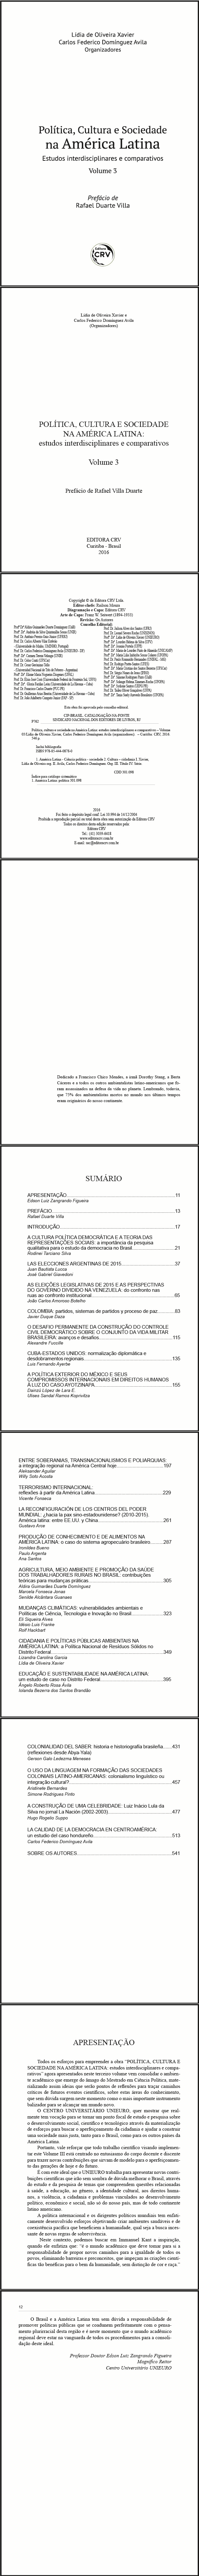 POLÍTICA, CULTURA E SOCIEDADE NA AMÉRICA LATINA:<br>estudos interdisciplinares e comparativos<br>Volume 3